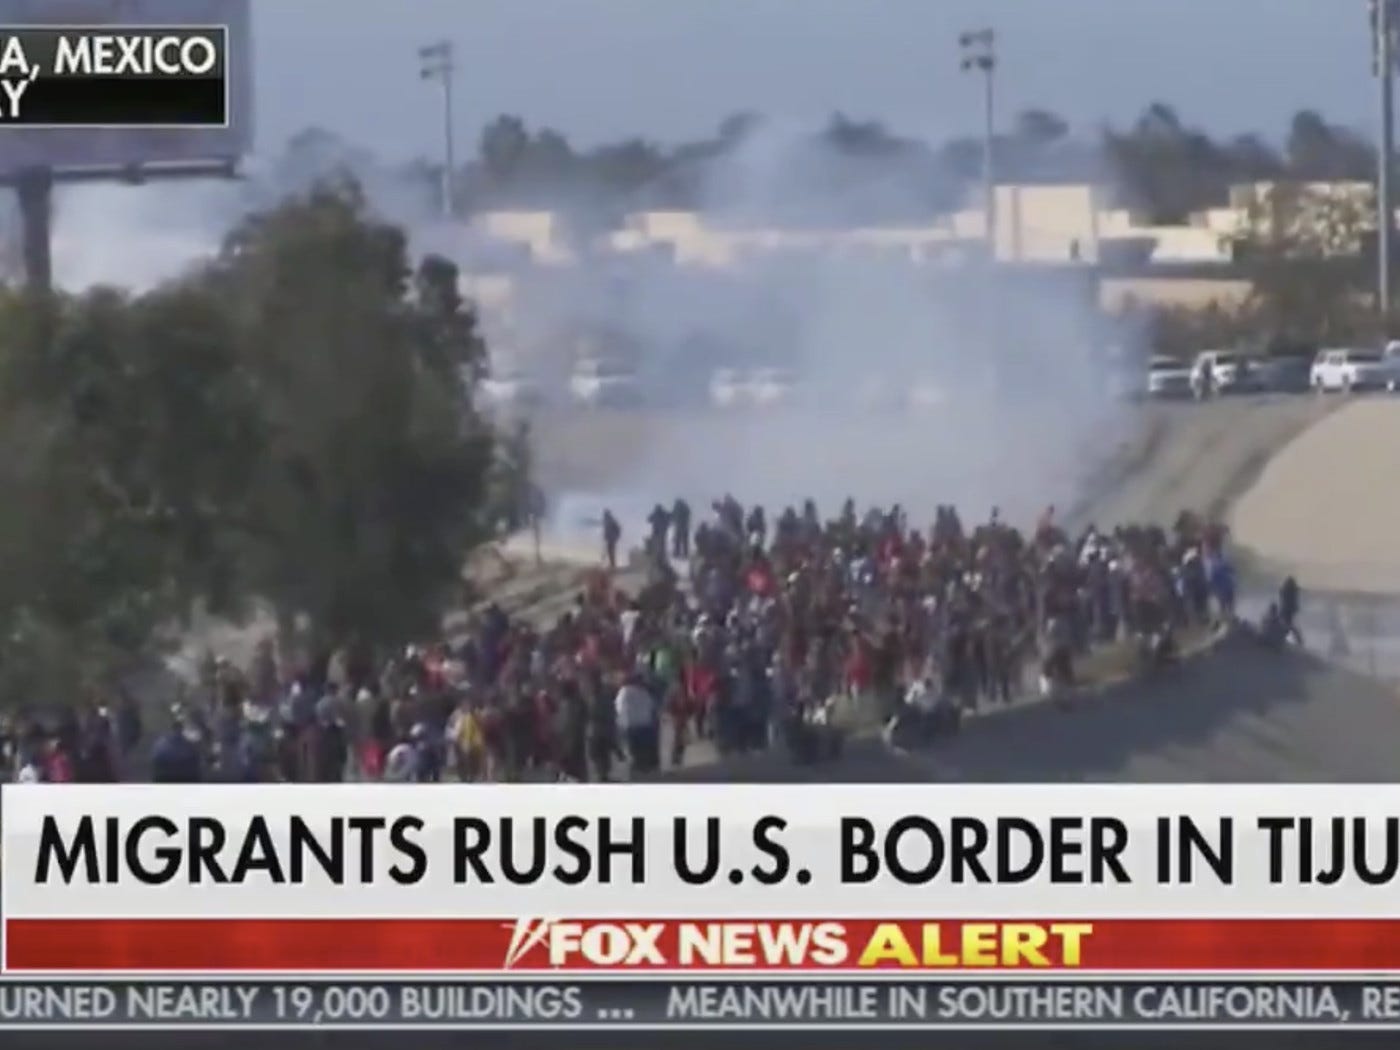 Fox News's caravan coverage is aimed at making viewers very afraid - Vox